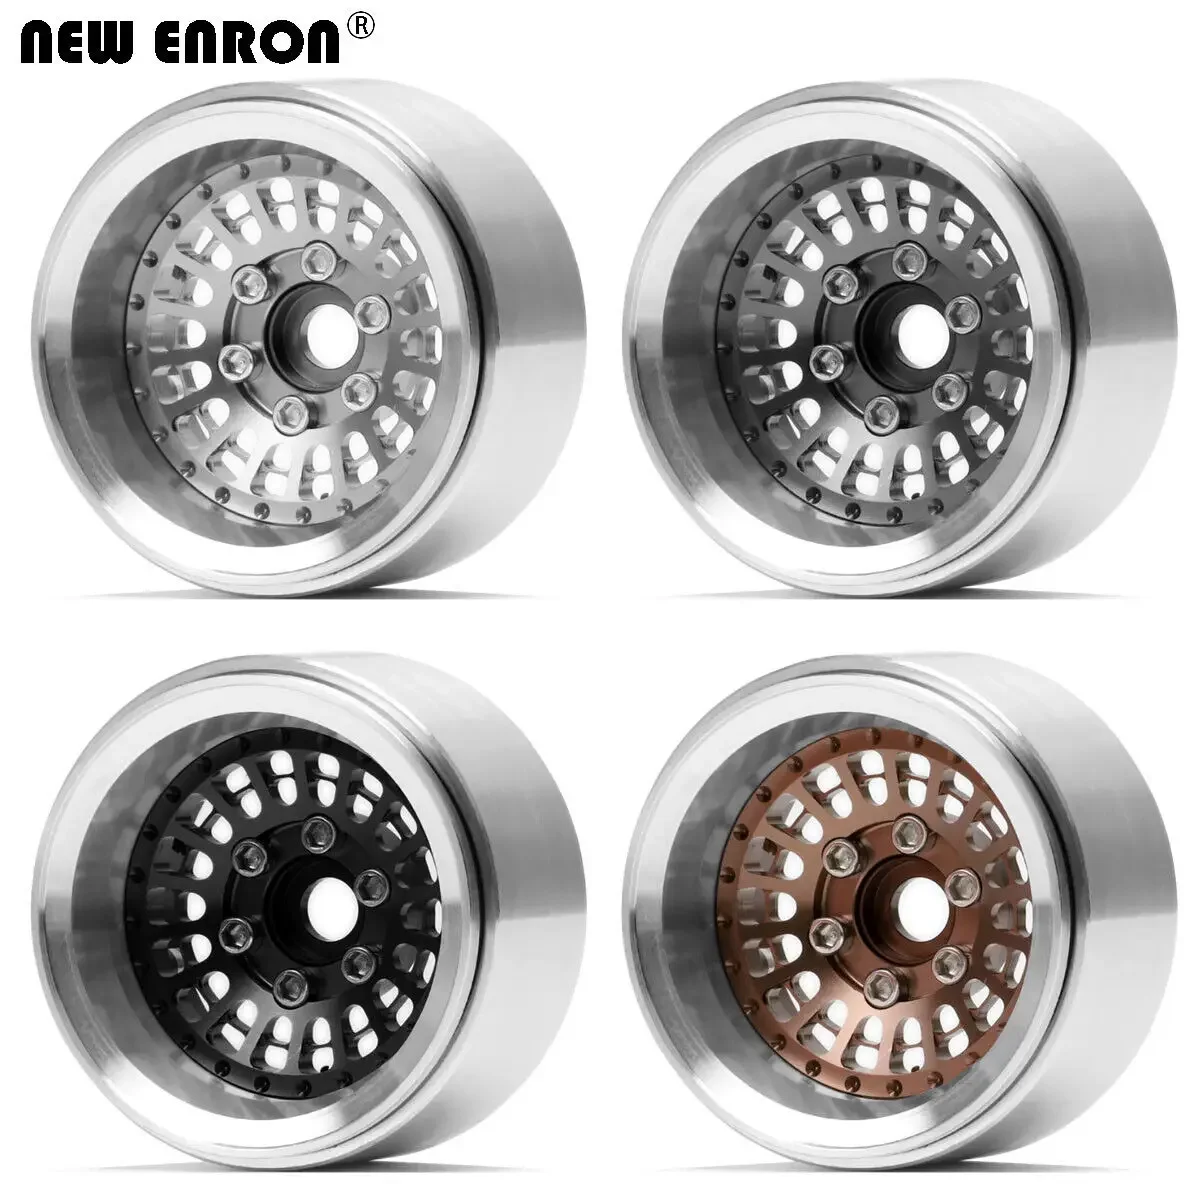 

NEW ENRON Aluminum 1.9 INCH-10mm Offset Beadlock Wheel Rim for 1/10 RC Crawler Car AXIAL SCX10 TRAXXAS TRX4